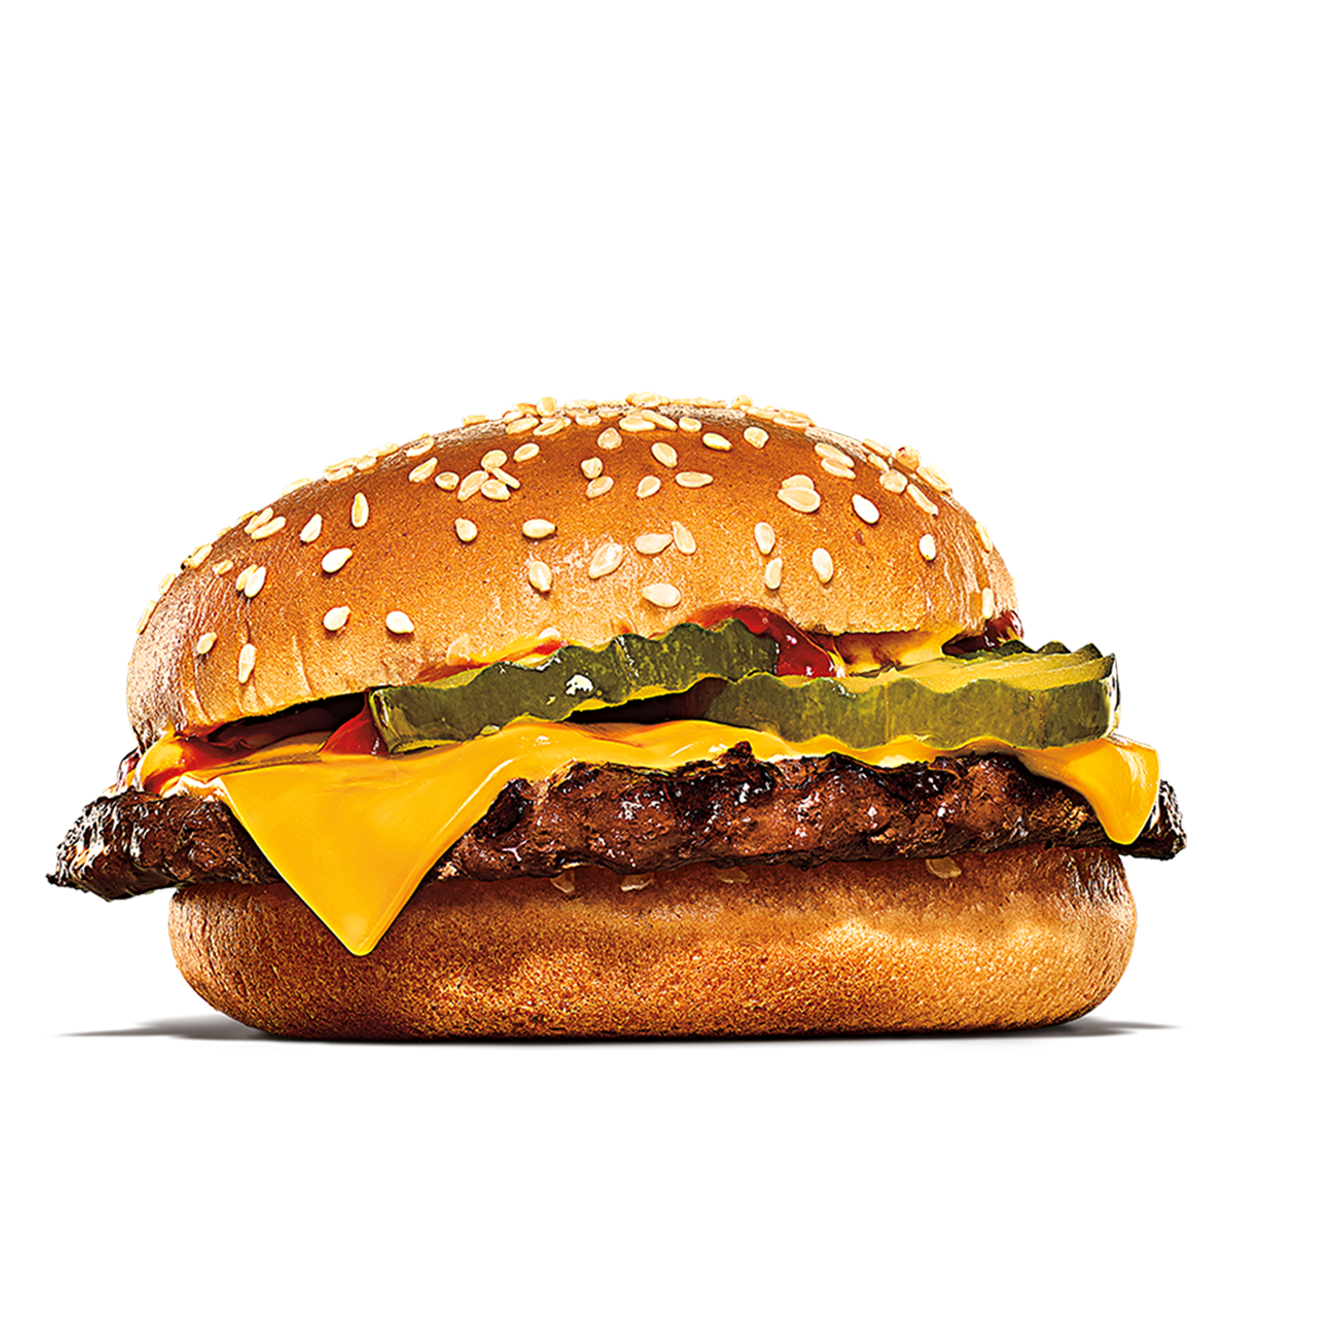 Burger King San Antonio (210)673-3900